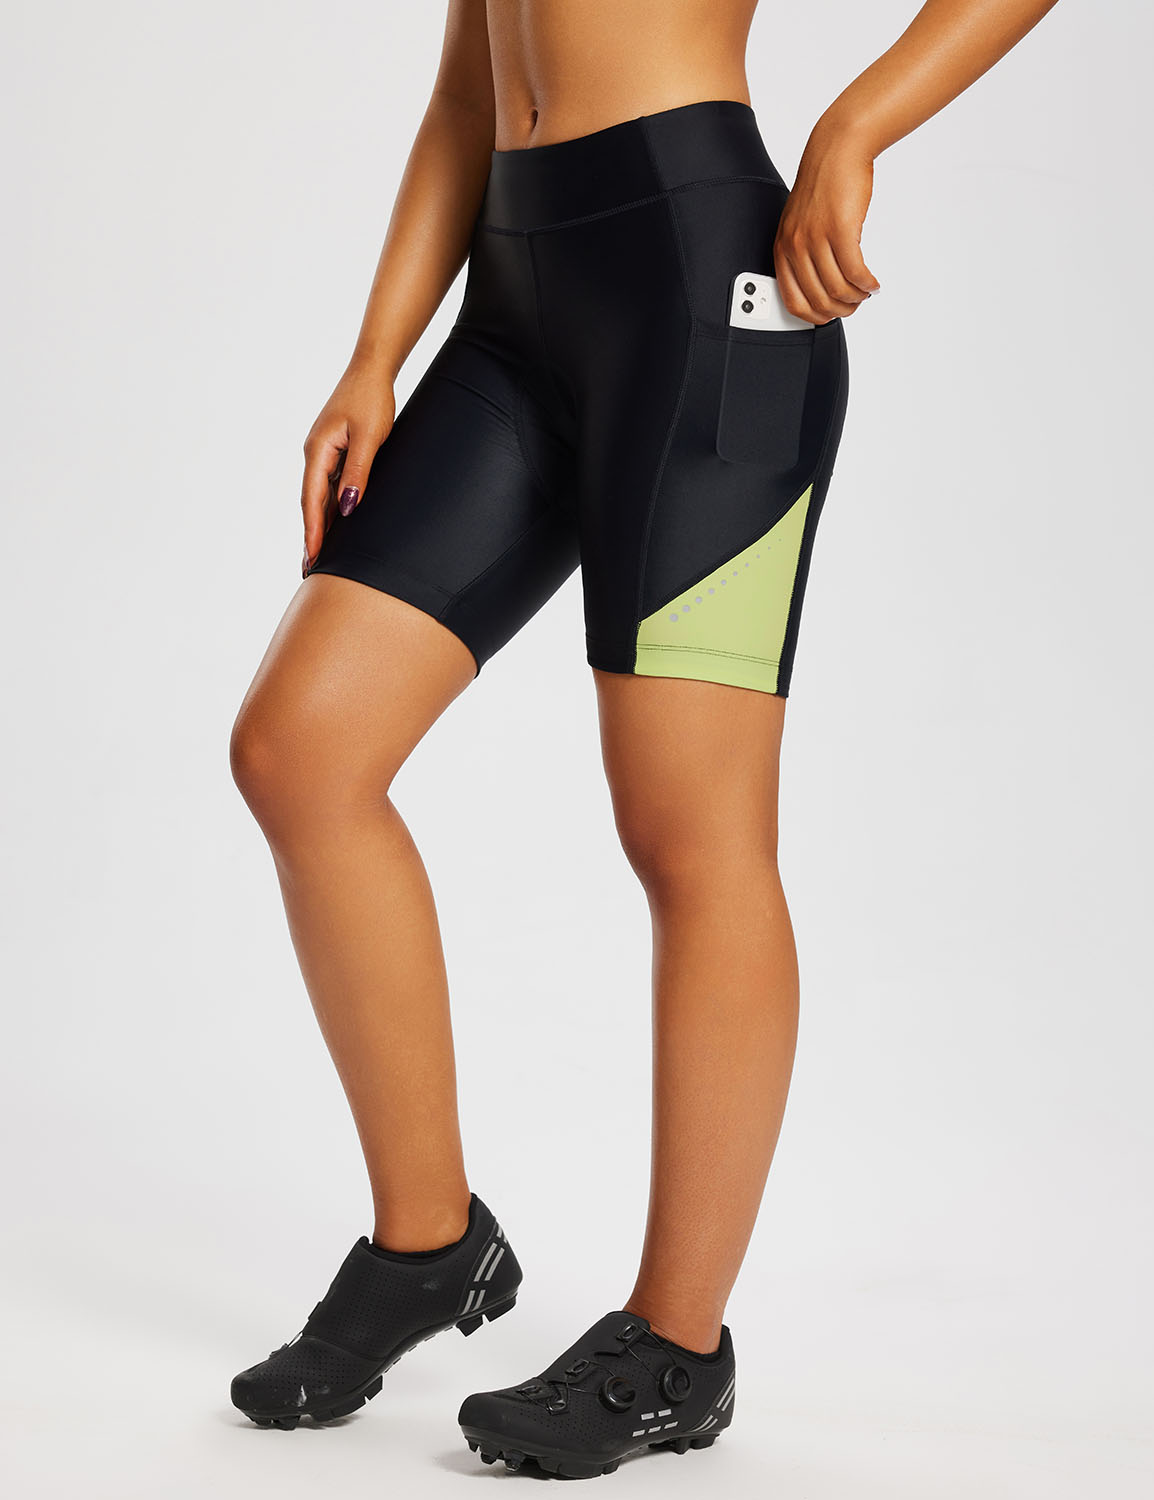  BALEAF Women's Bike Shorts 4D Padded Cycling Spinning Road Bike  Pockets Wide Waistband UPF50+, Black XS : Clothing, Shoes & Jewelry